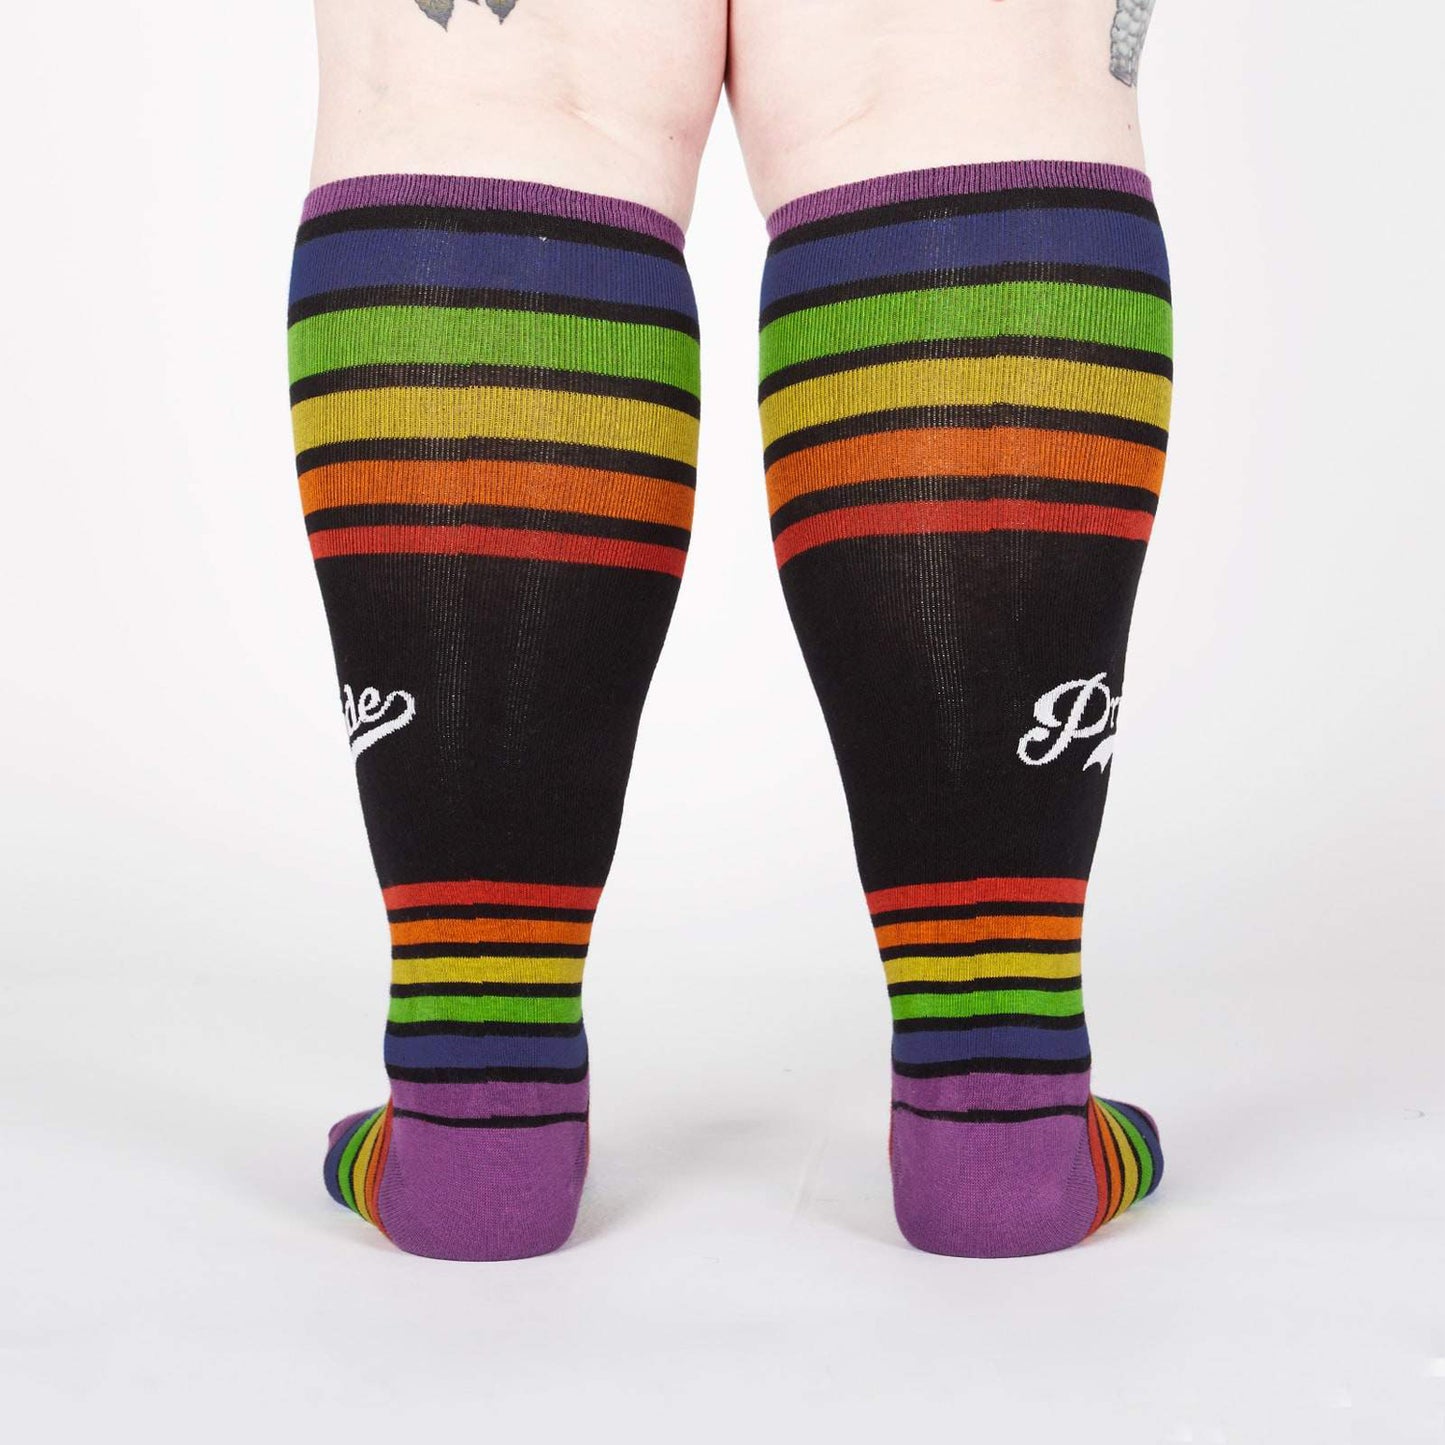 Sock It To Me Unisex STRETCH-IT Knee High Socks - Team Pride